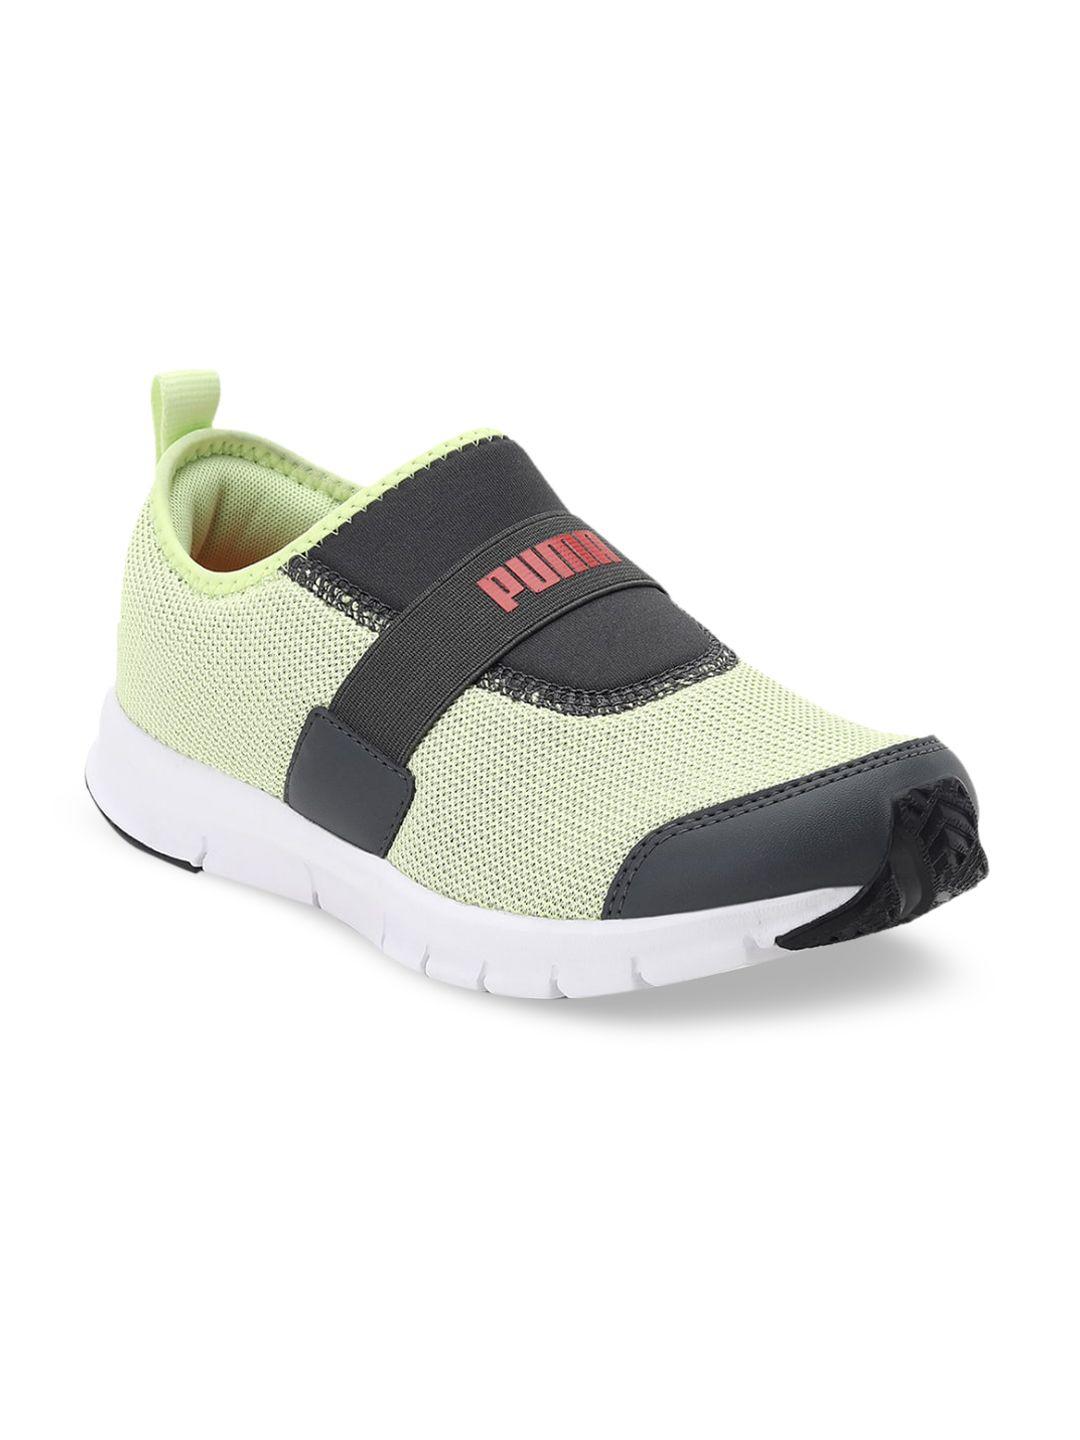 puma unisex kids green woven design flex jr idp slip-on sneakers